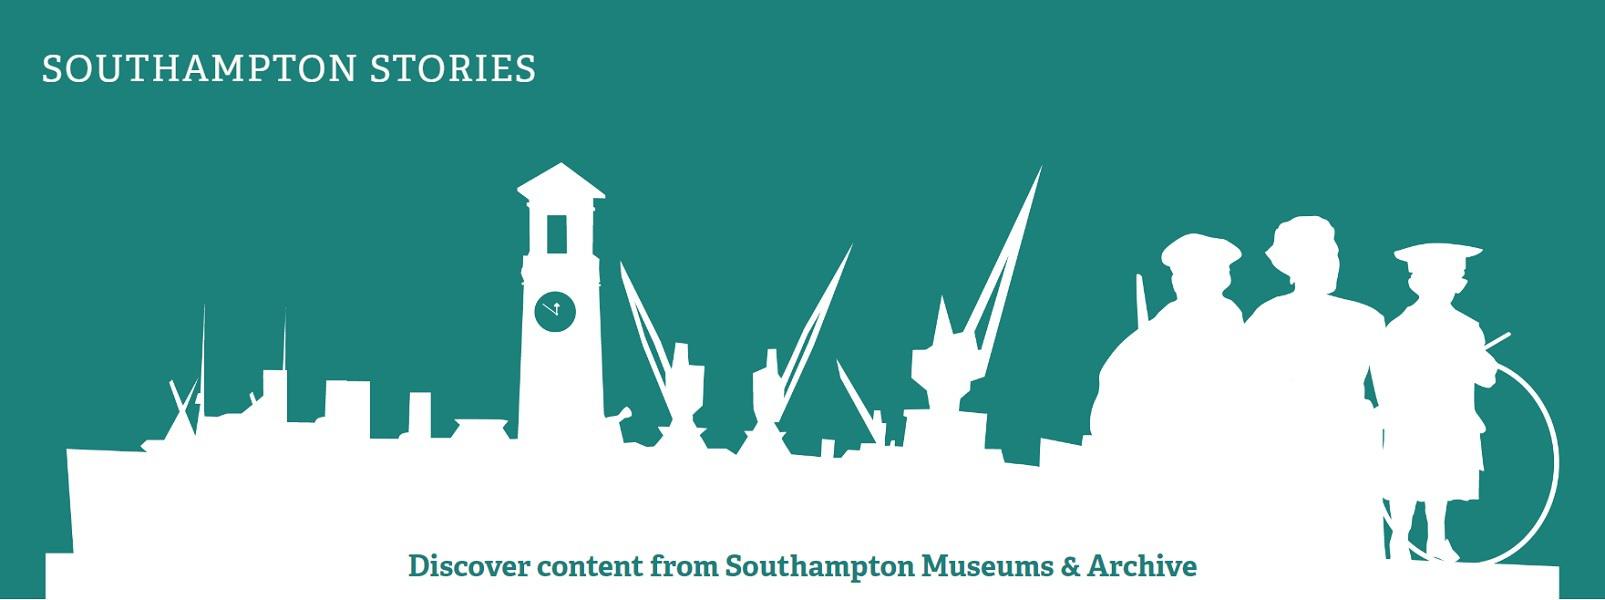 Southampton Stories promotional image